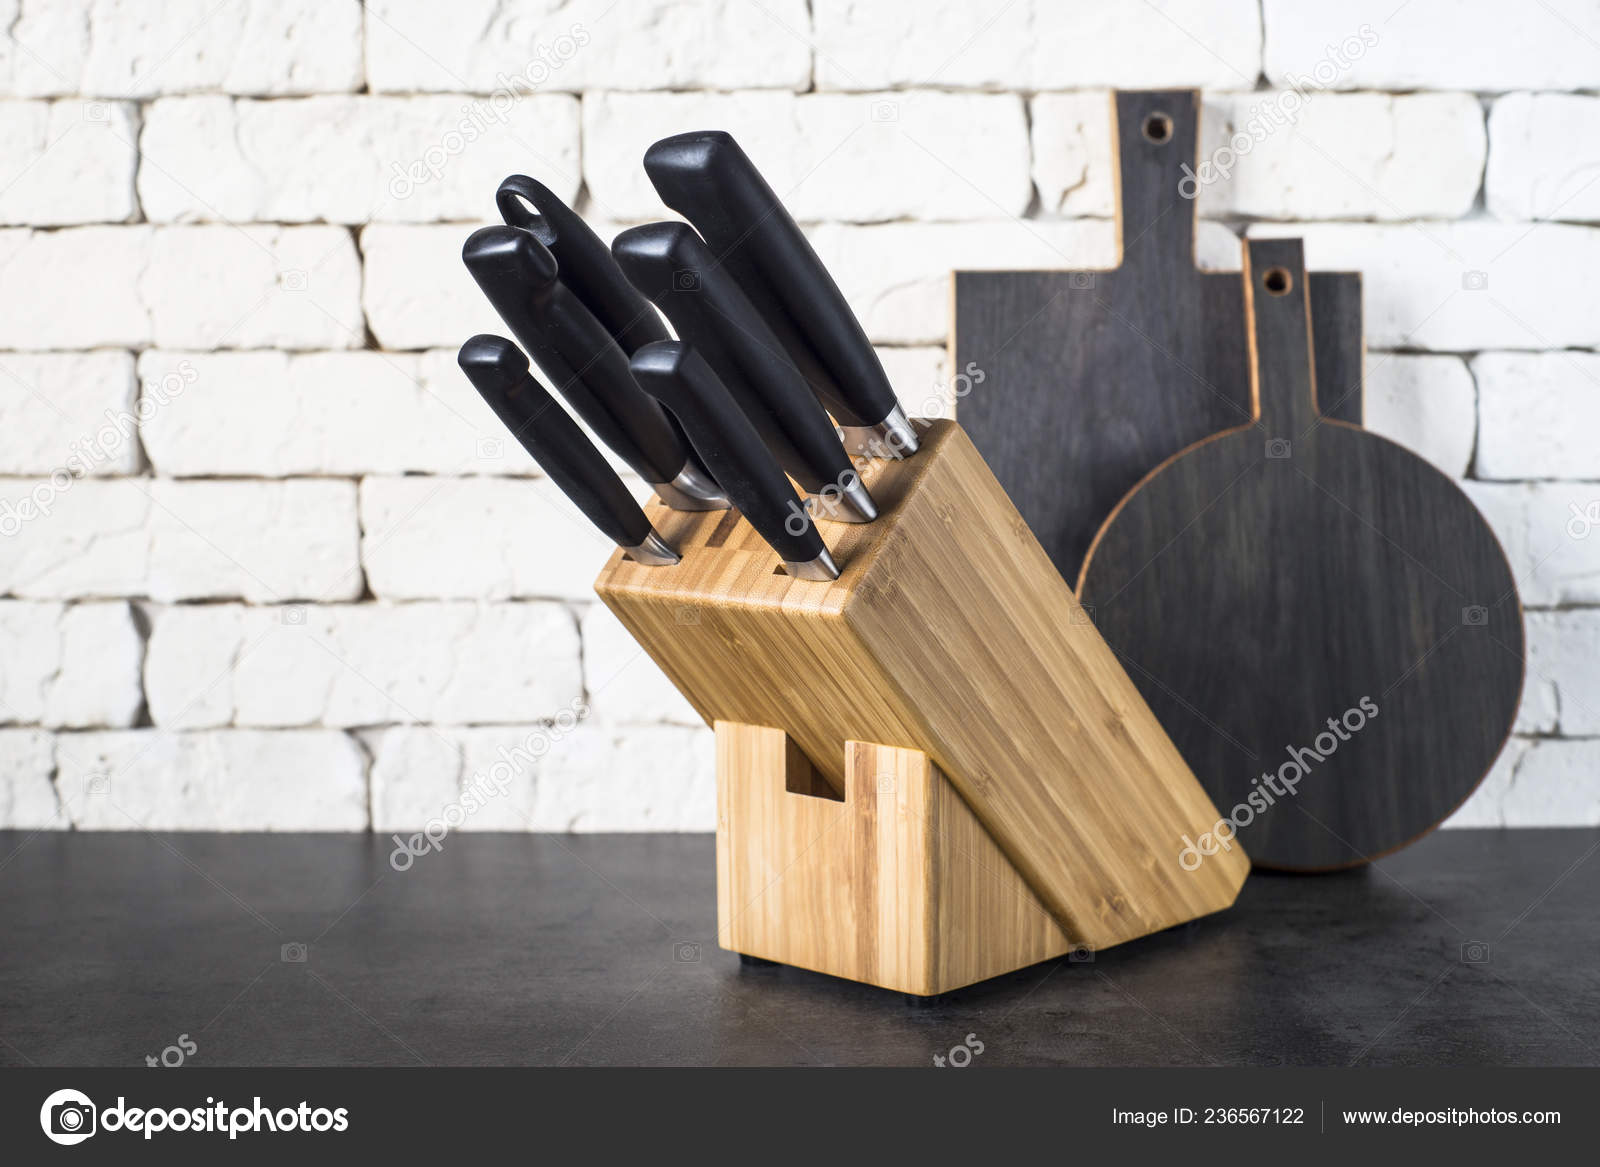 https://st4.depositphotos.com/1558912/23656/i/1600/depositphotos_236567122-stock-photo-knife-block-on-the-kitchen.jpg